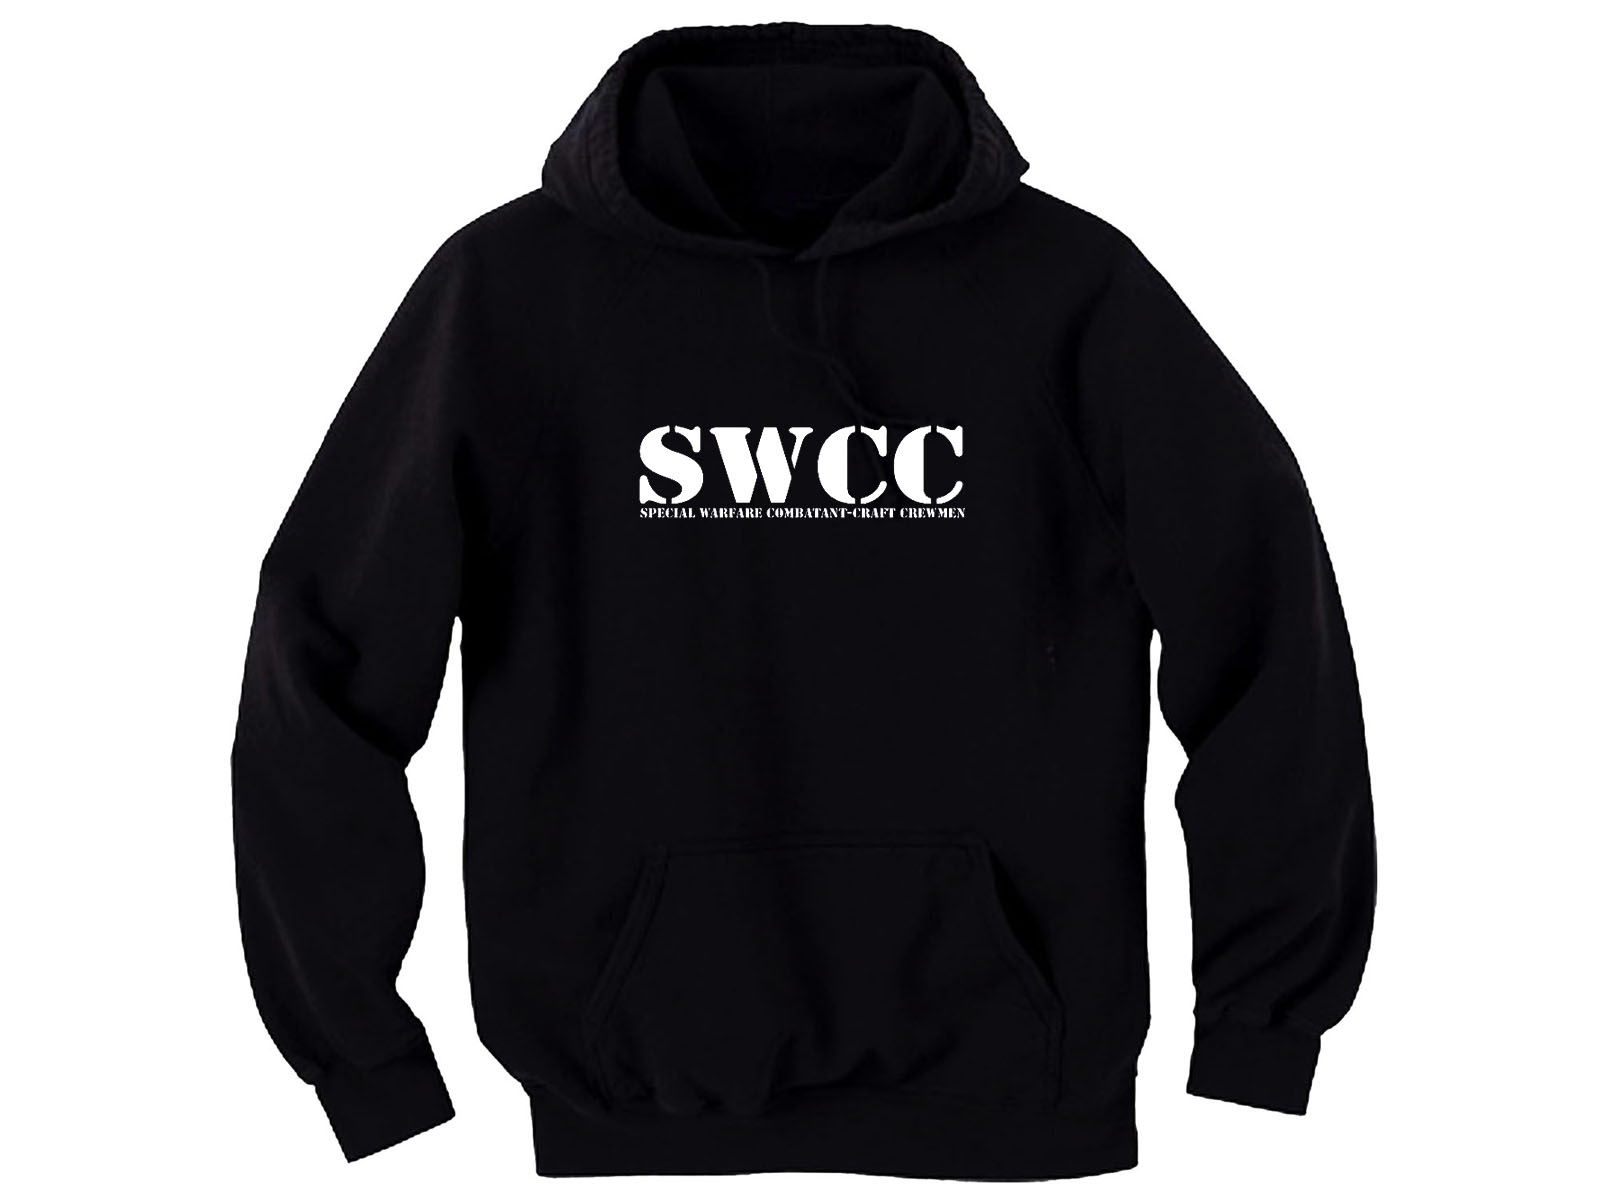 U.S. Navy's special warfare combatant-craft crewmen SWCC hoodie